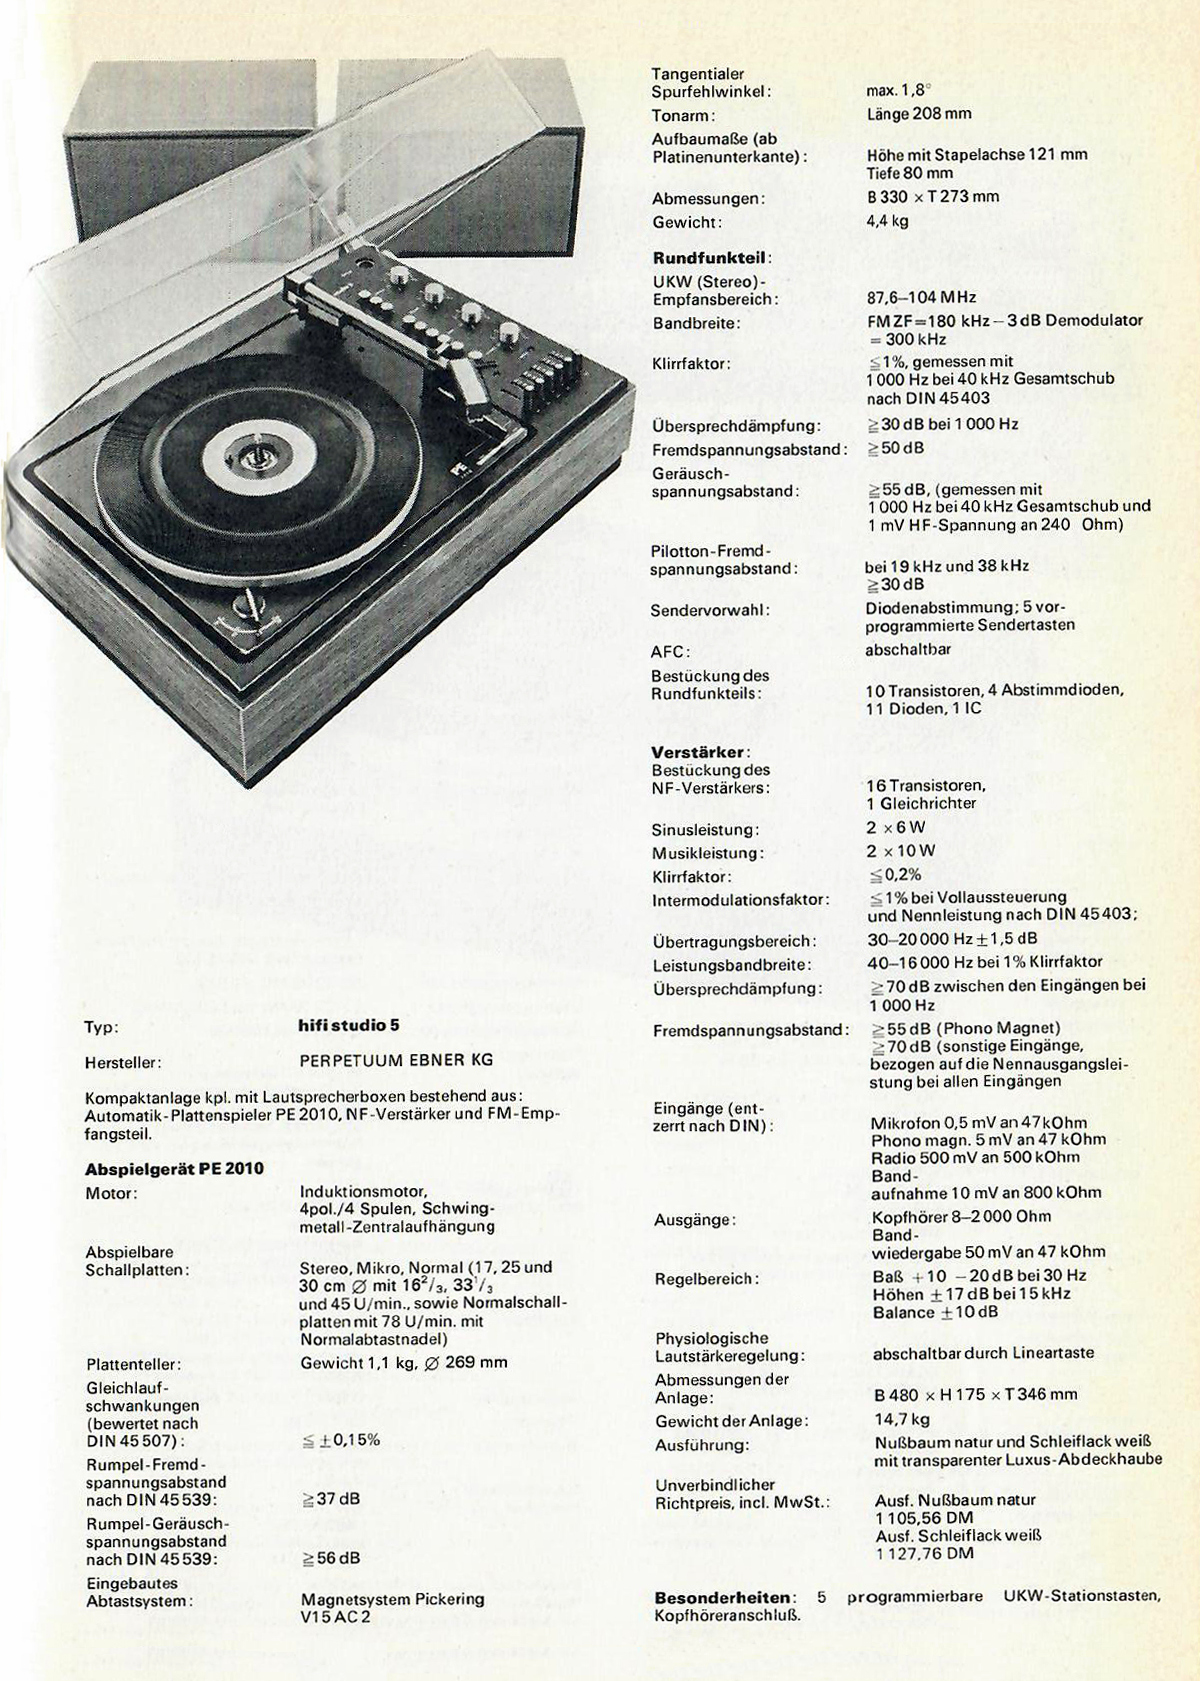 Perpetuum Ebner Hifi Studio 5-Daten-1972.jpg